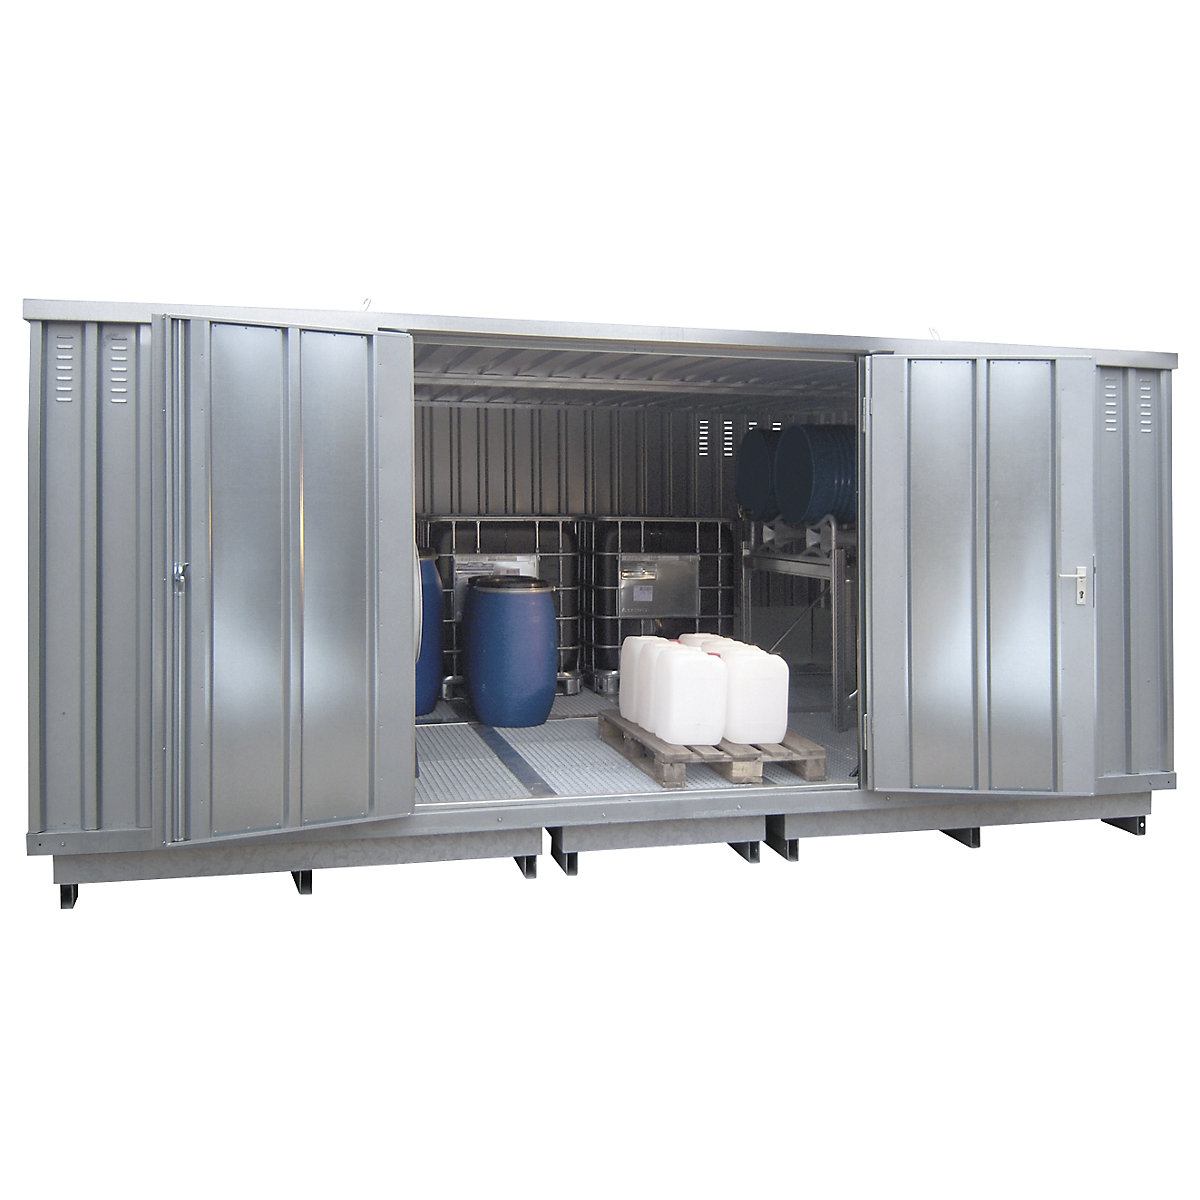 Hazardous goods storage container for water hazardous media